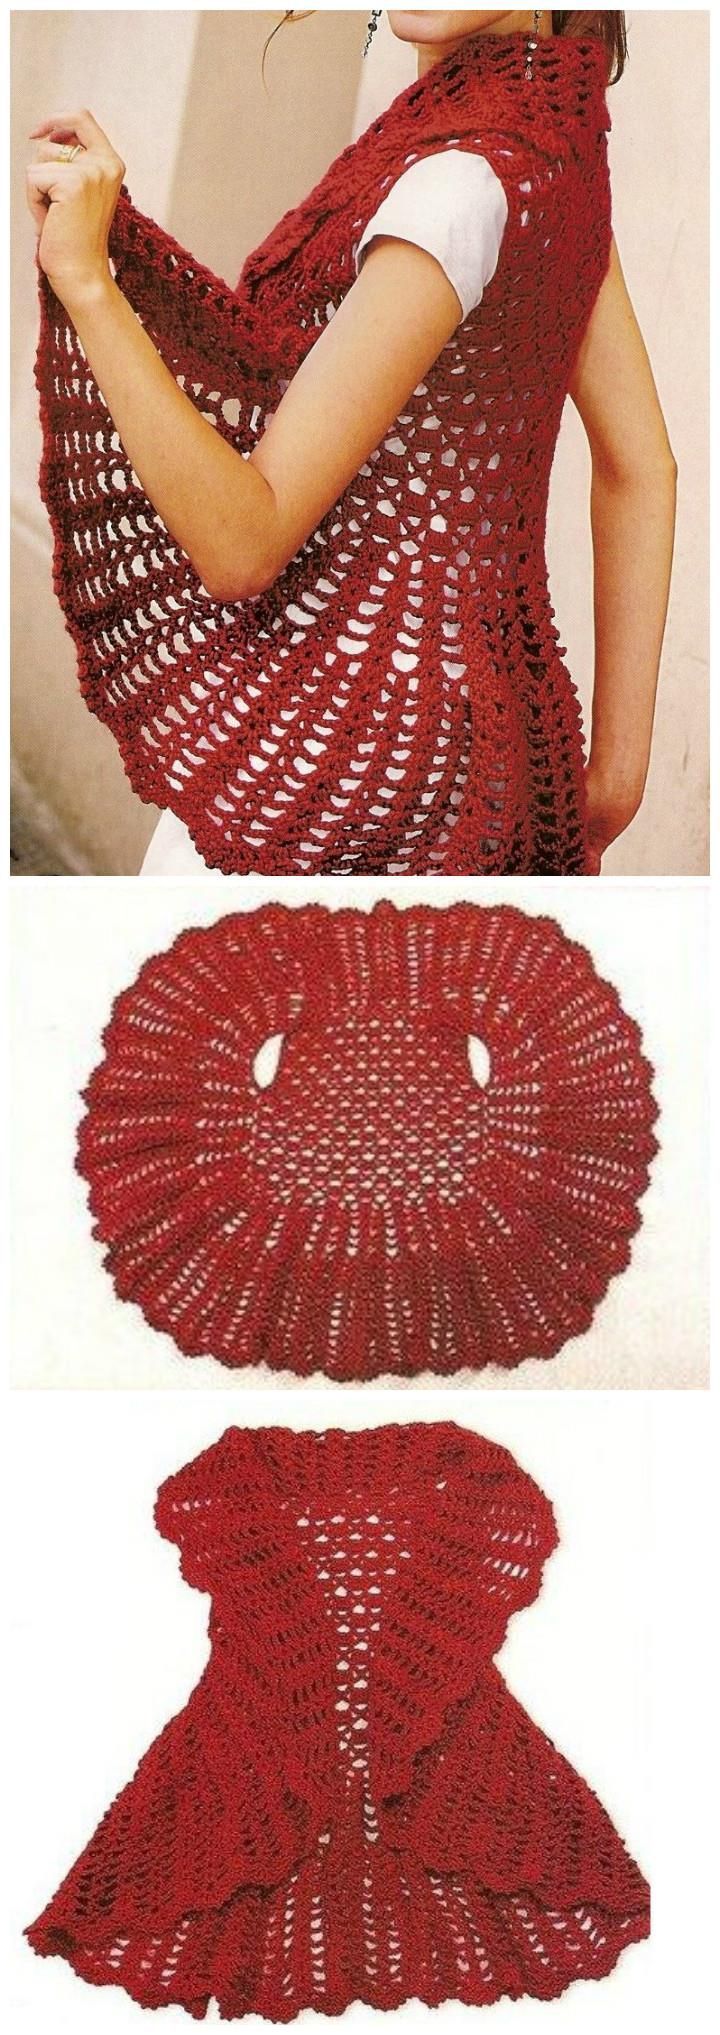 Crochet Red Circle Vest – 12 Free Crochet Patterns for Circular Vest Jacket | 101 Crochet